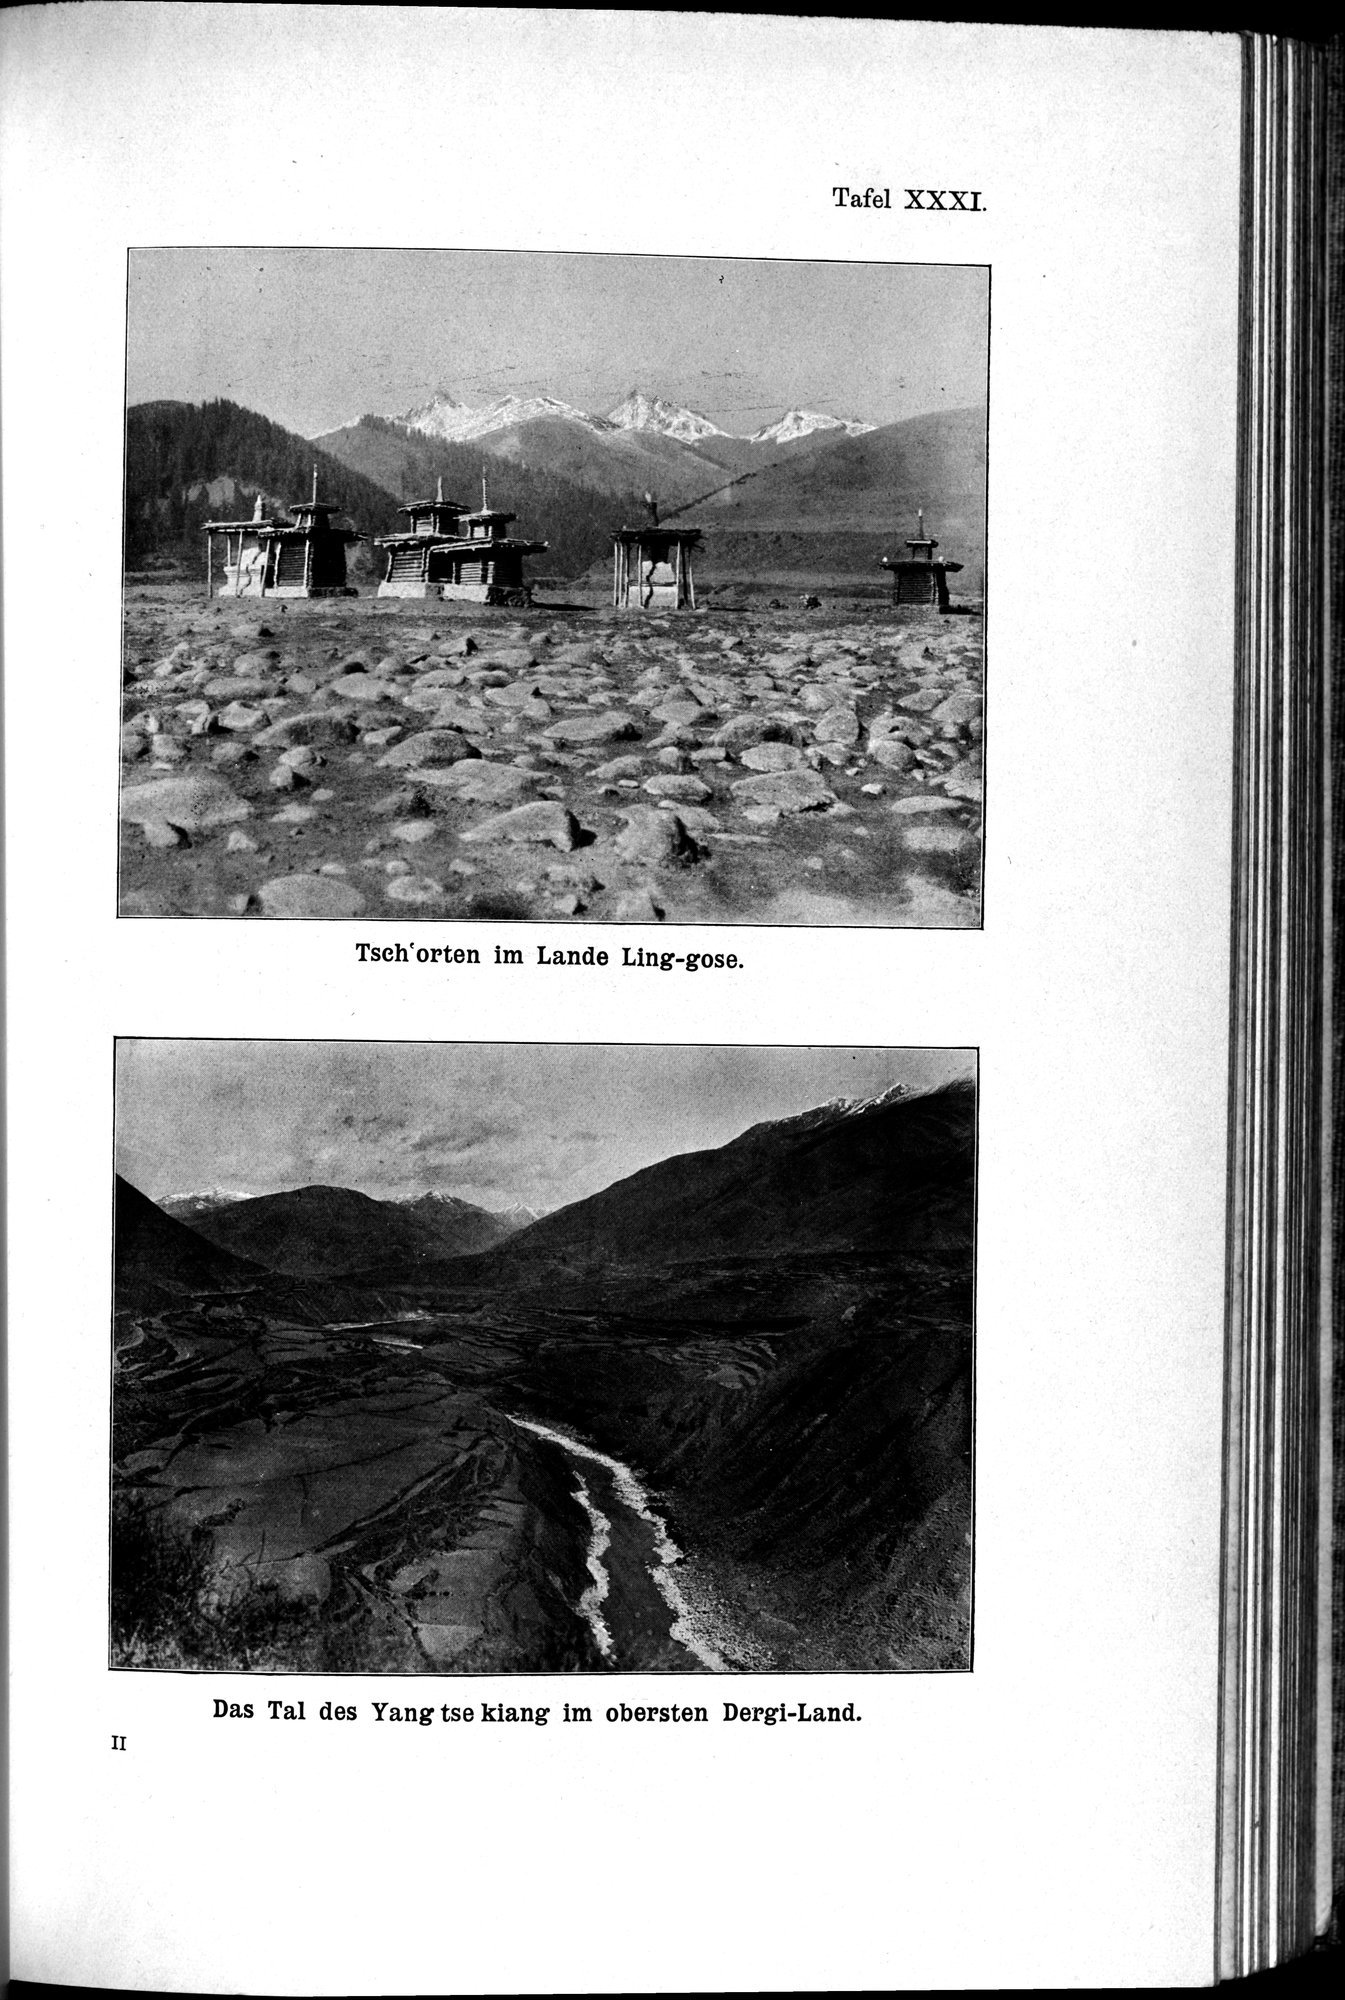 Meine Tibetreise : vol.2 / Page 201 (Grayscale High Resolution Image)